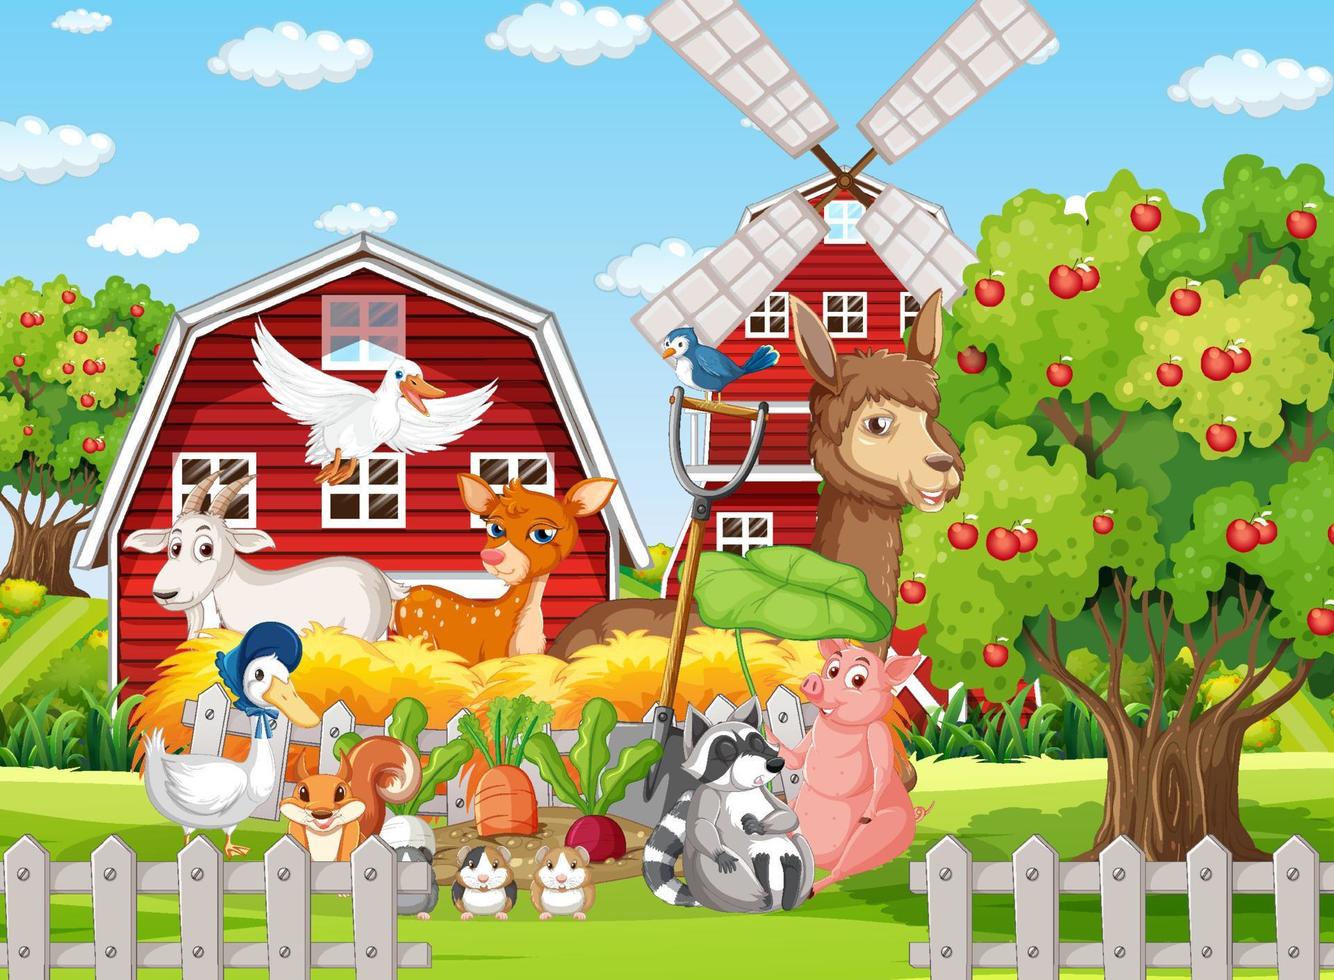 Farm scene with animals by the barn vector